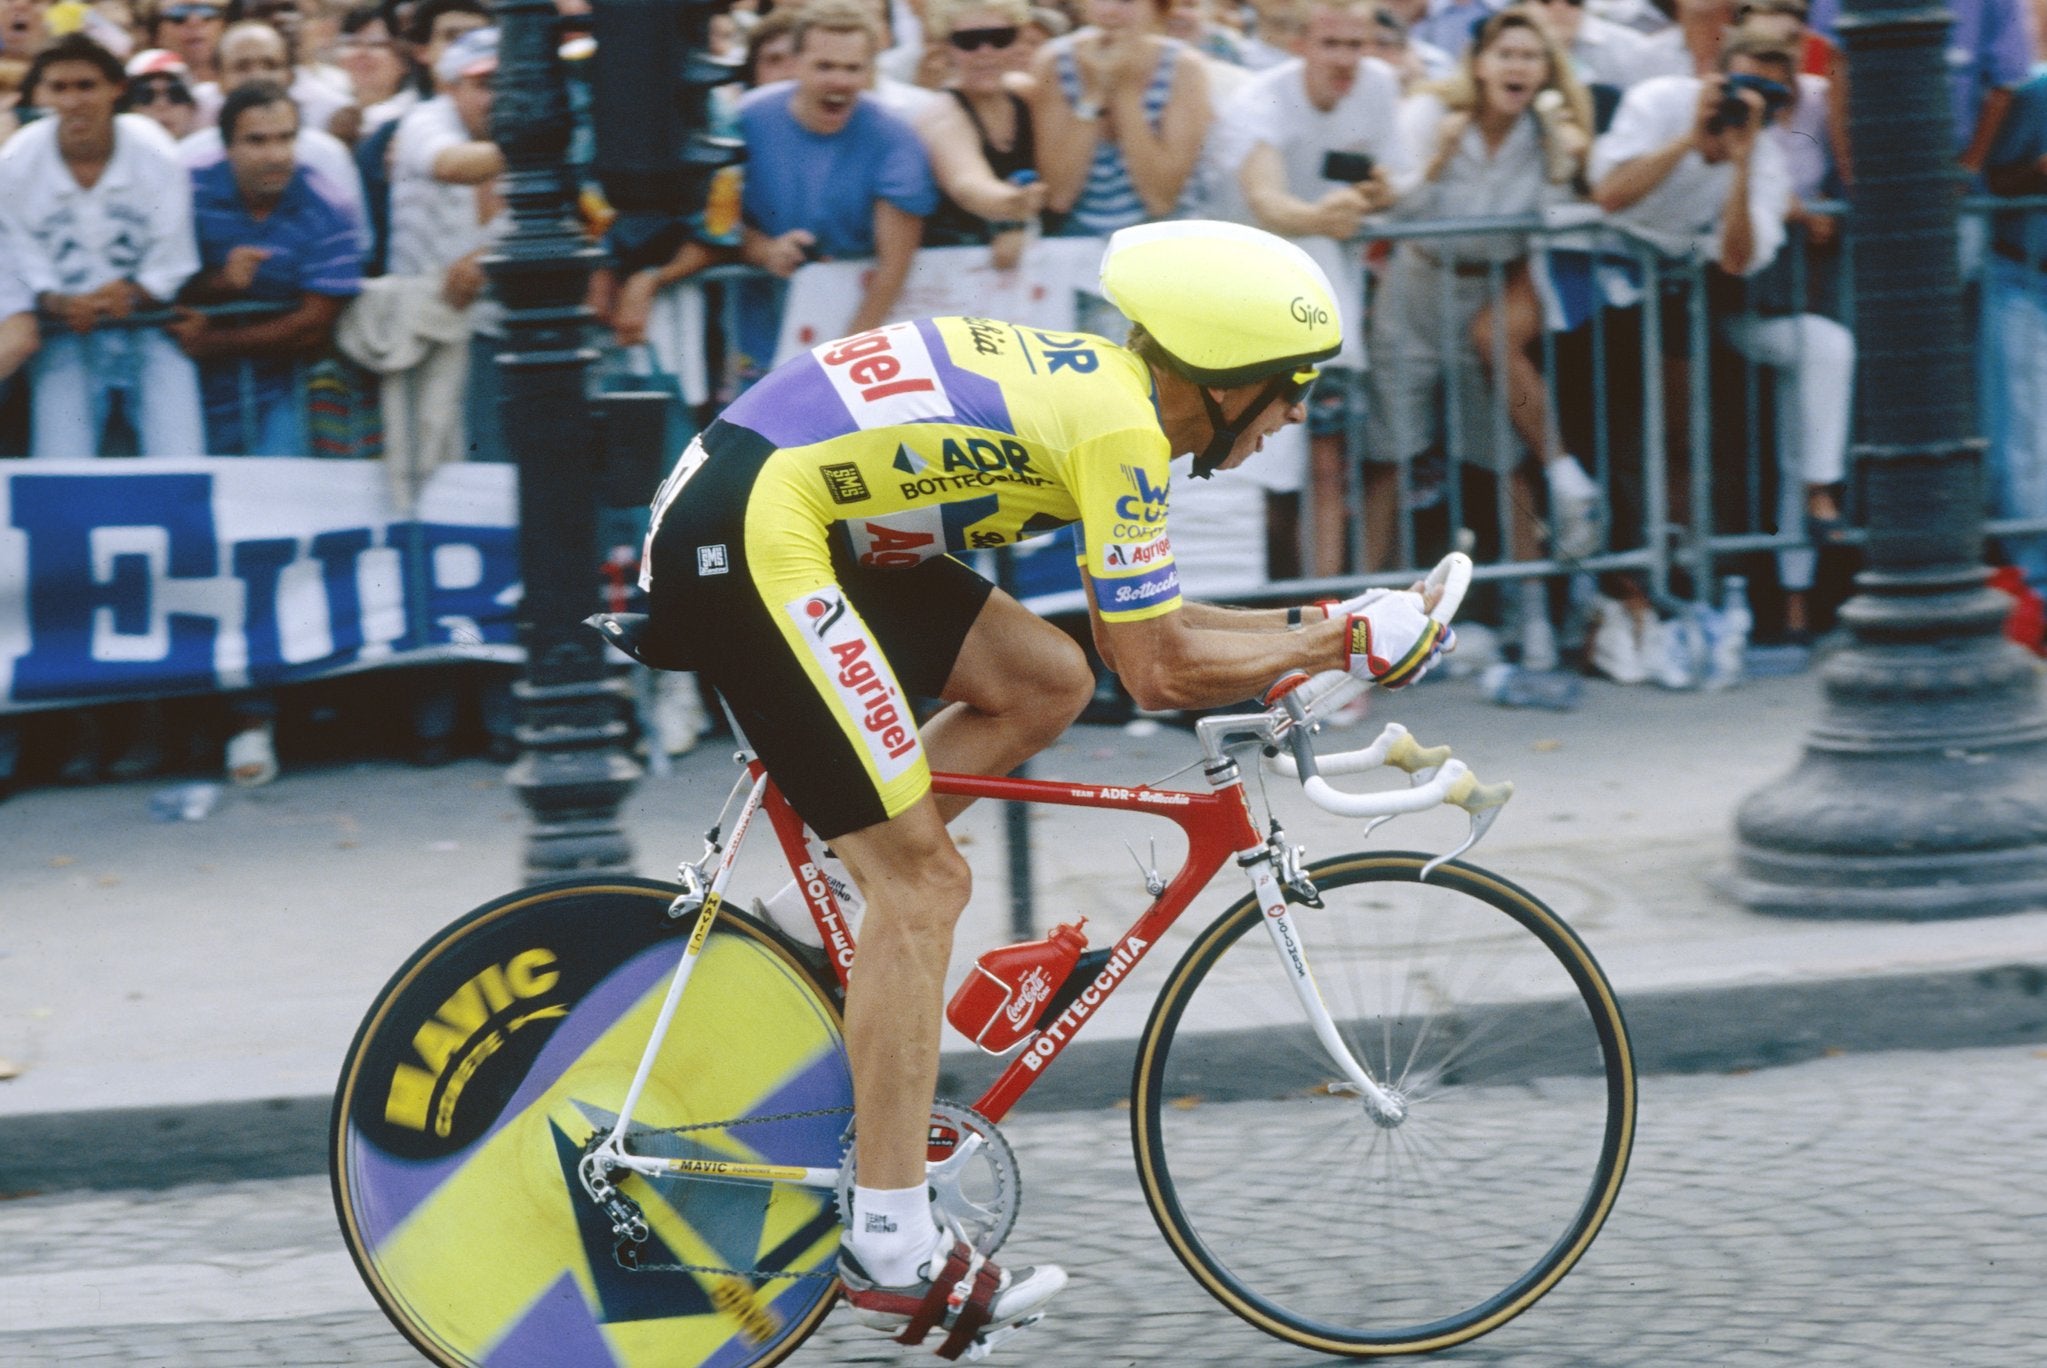 Greg Lemond Tour de France 1989 win tt 8 seconds Bottecchia bike